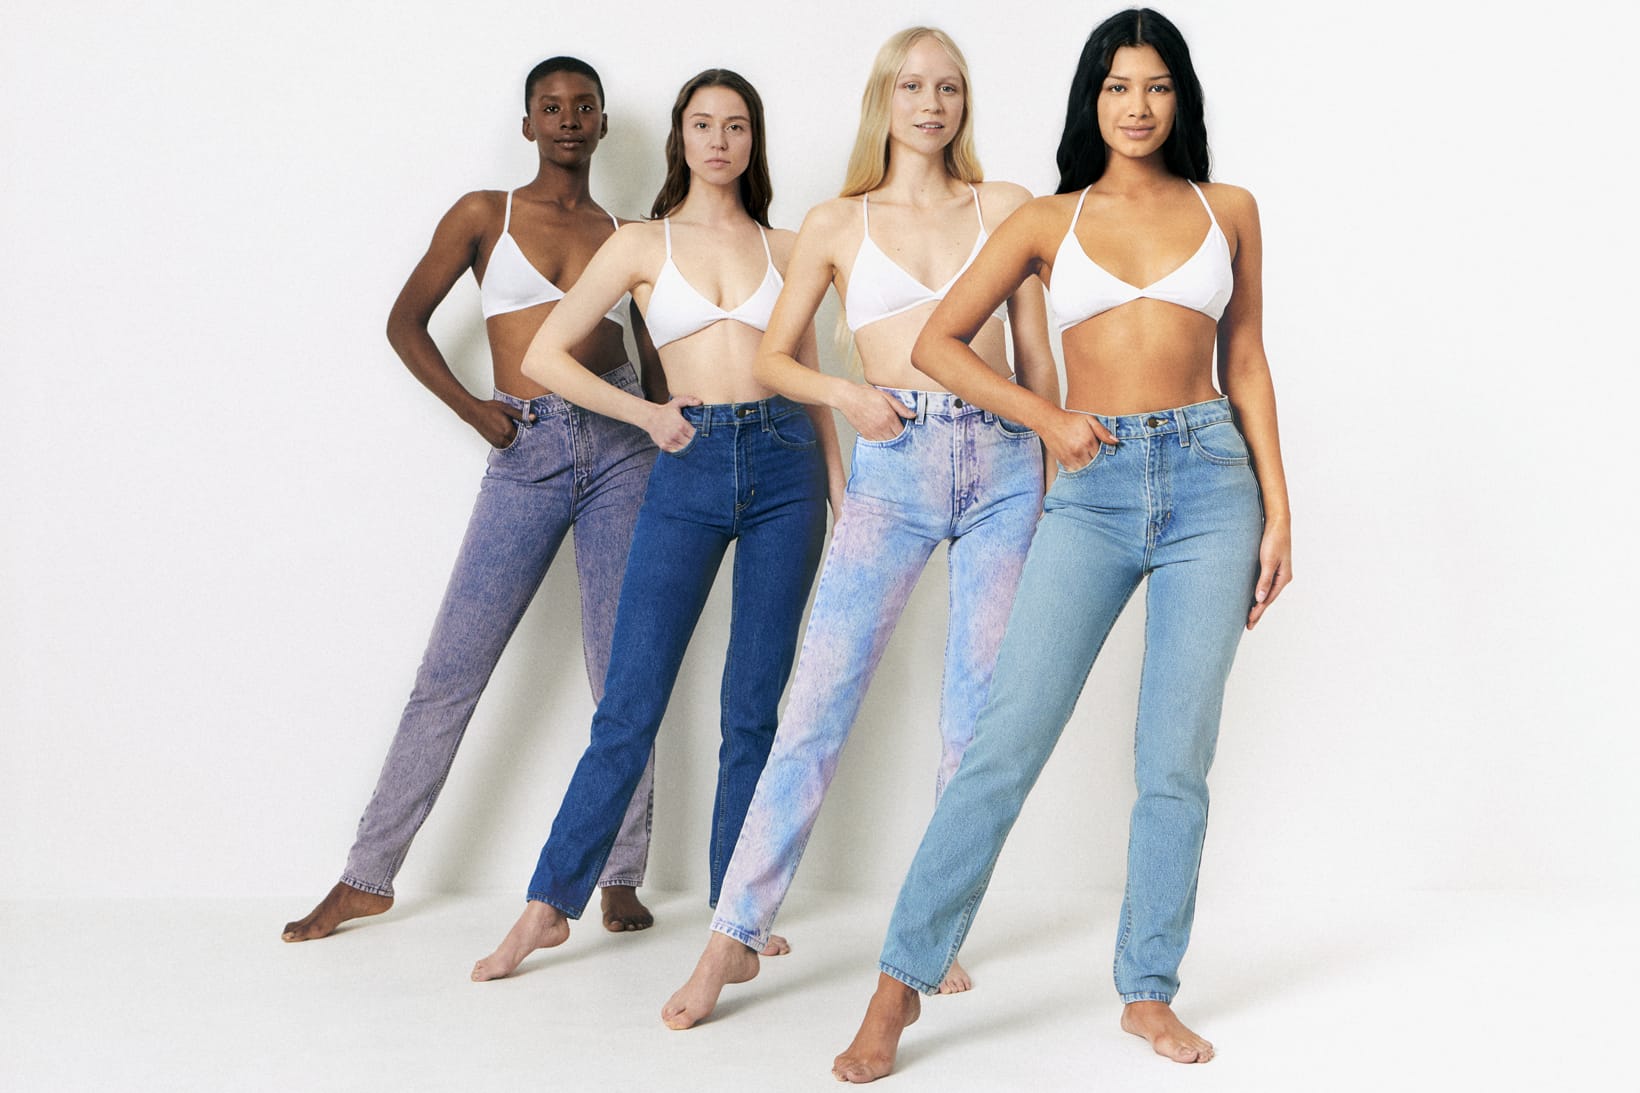 American Apparel Women's High-Waist Jean